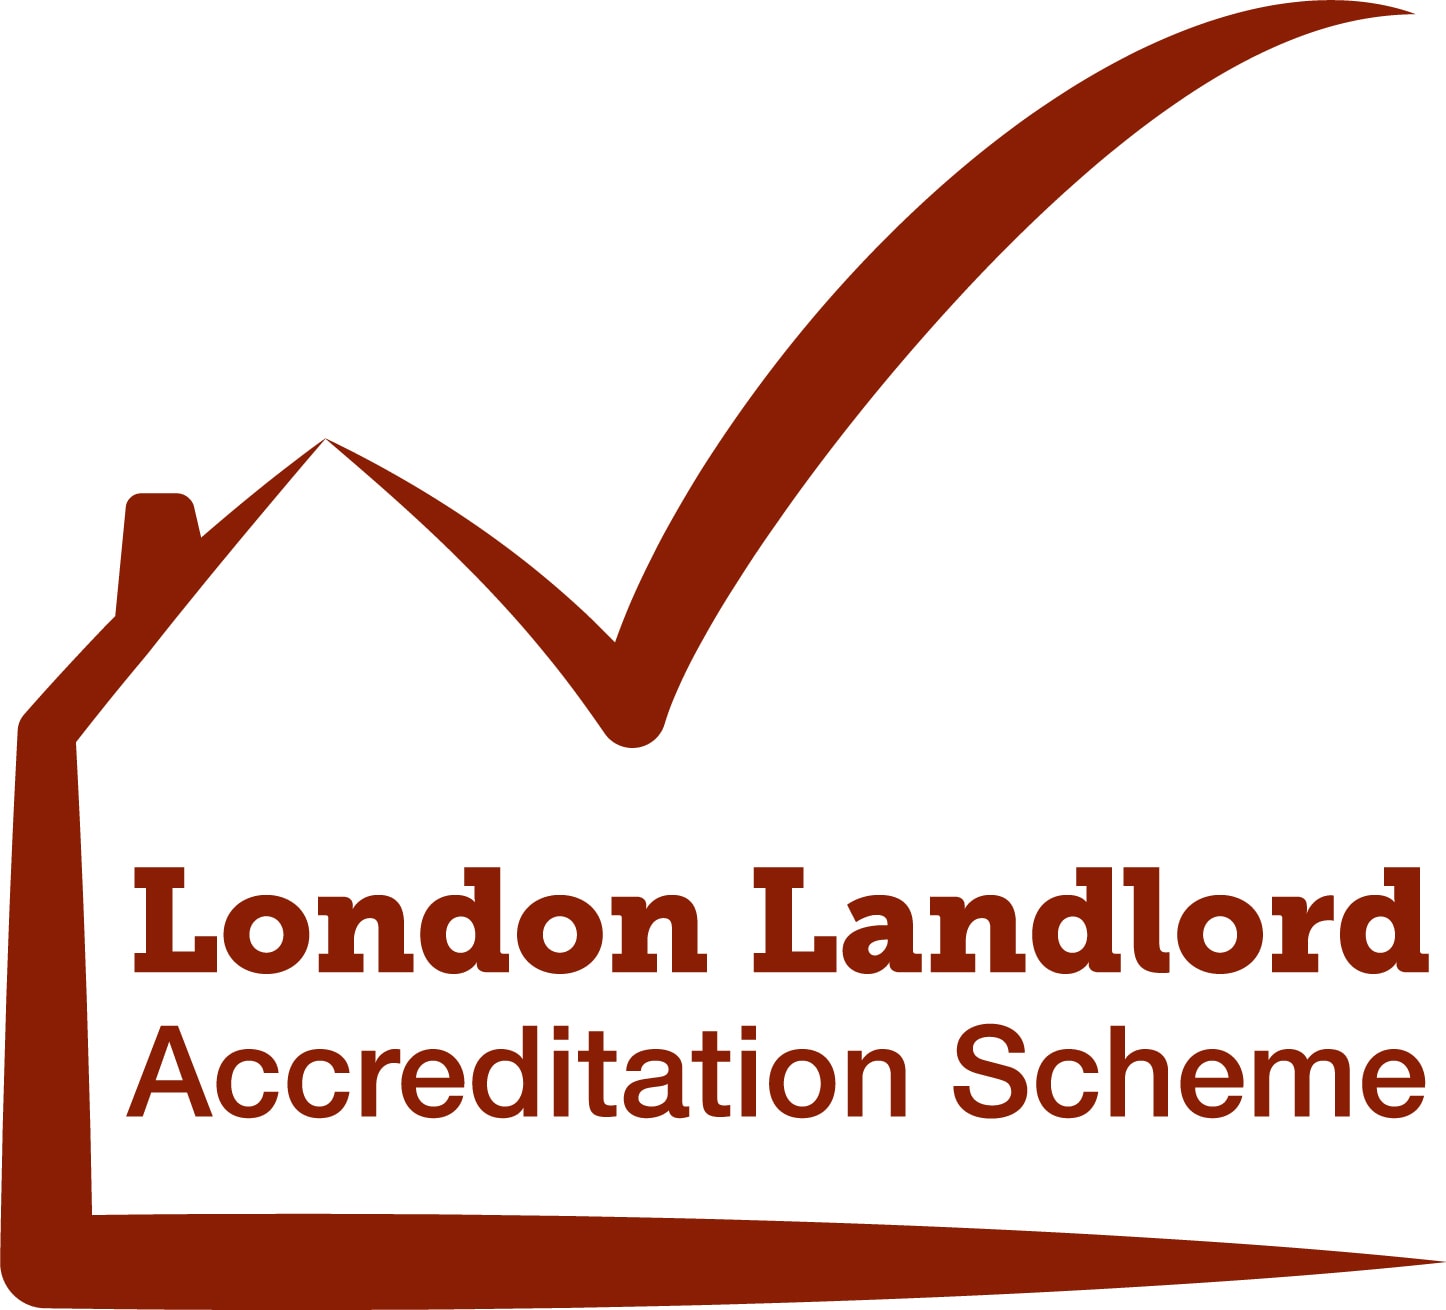 London Landlord Accreditation Scheme